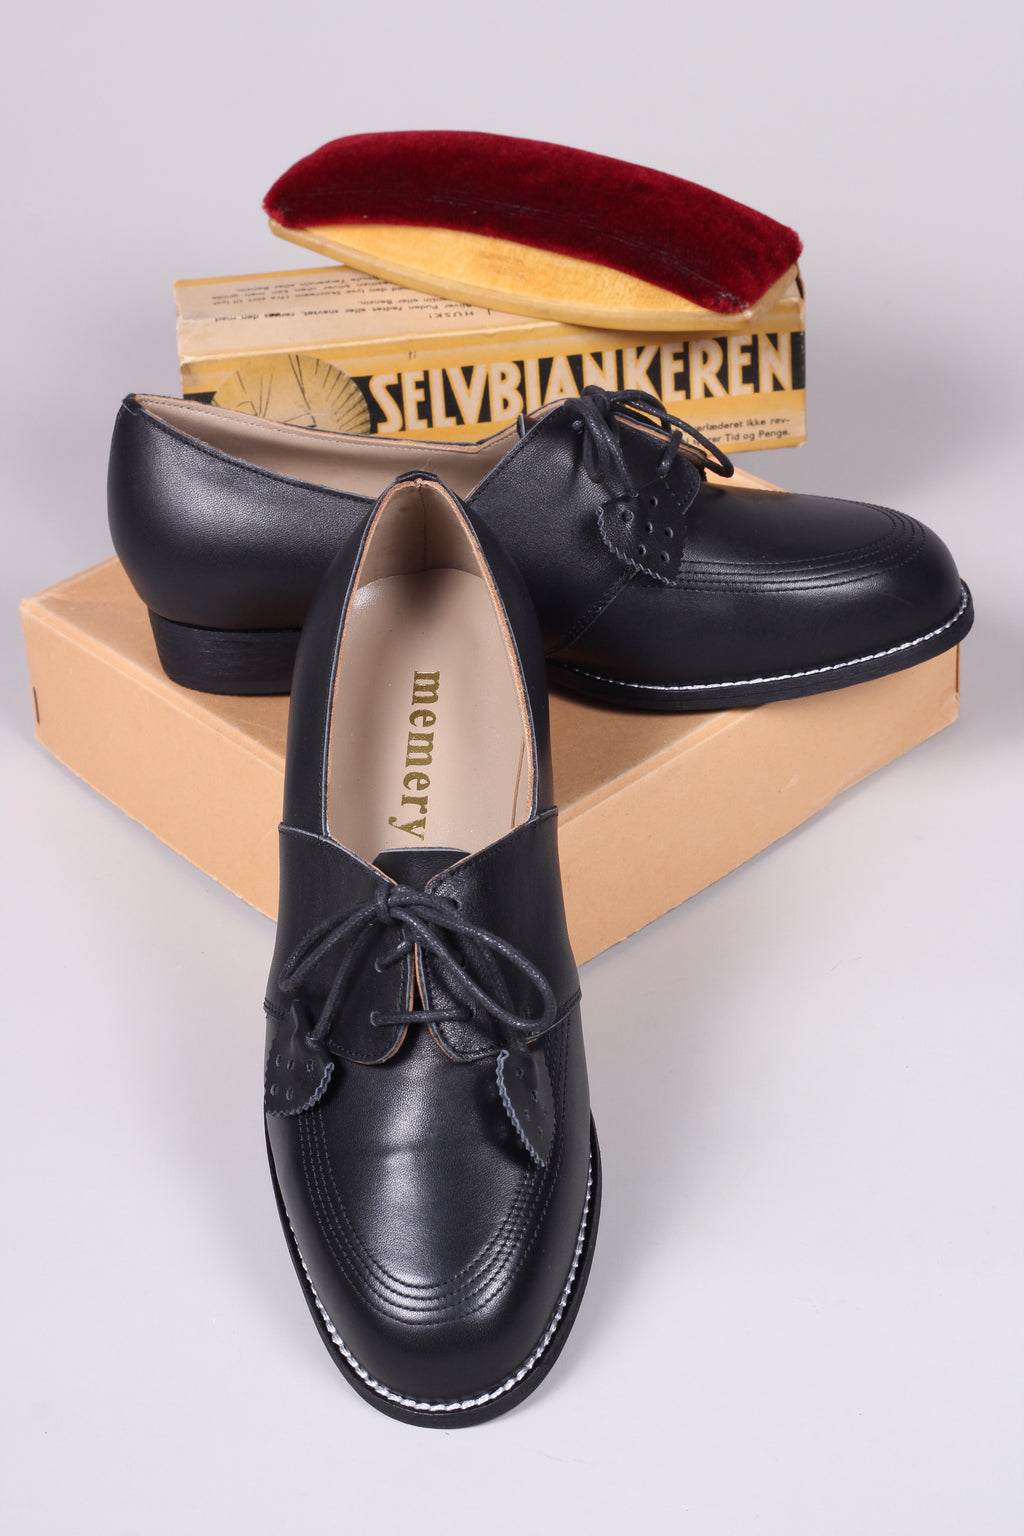 1950s shoes – memery